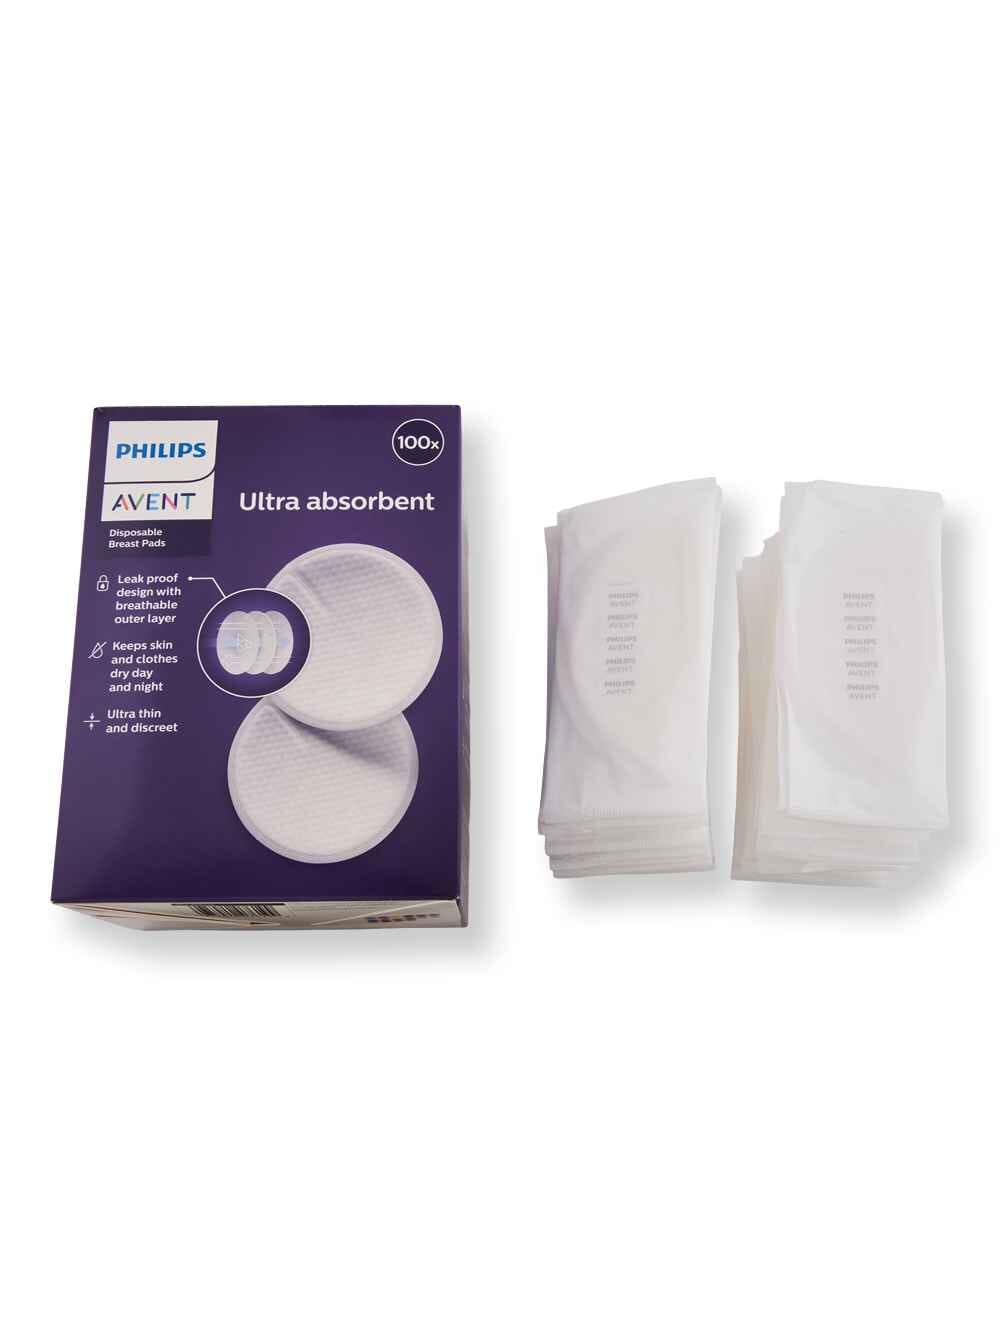 Philips Avent Philips Avent Maximum Comfort Disposable Breast Pads 100 Ct Nursing Pads 